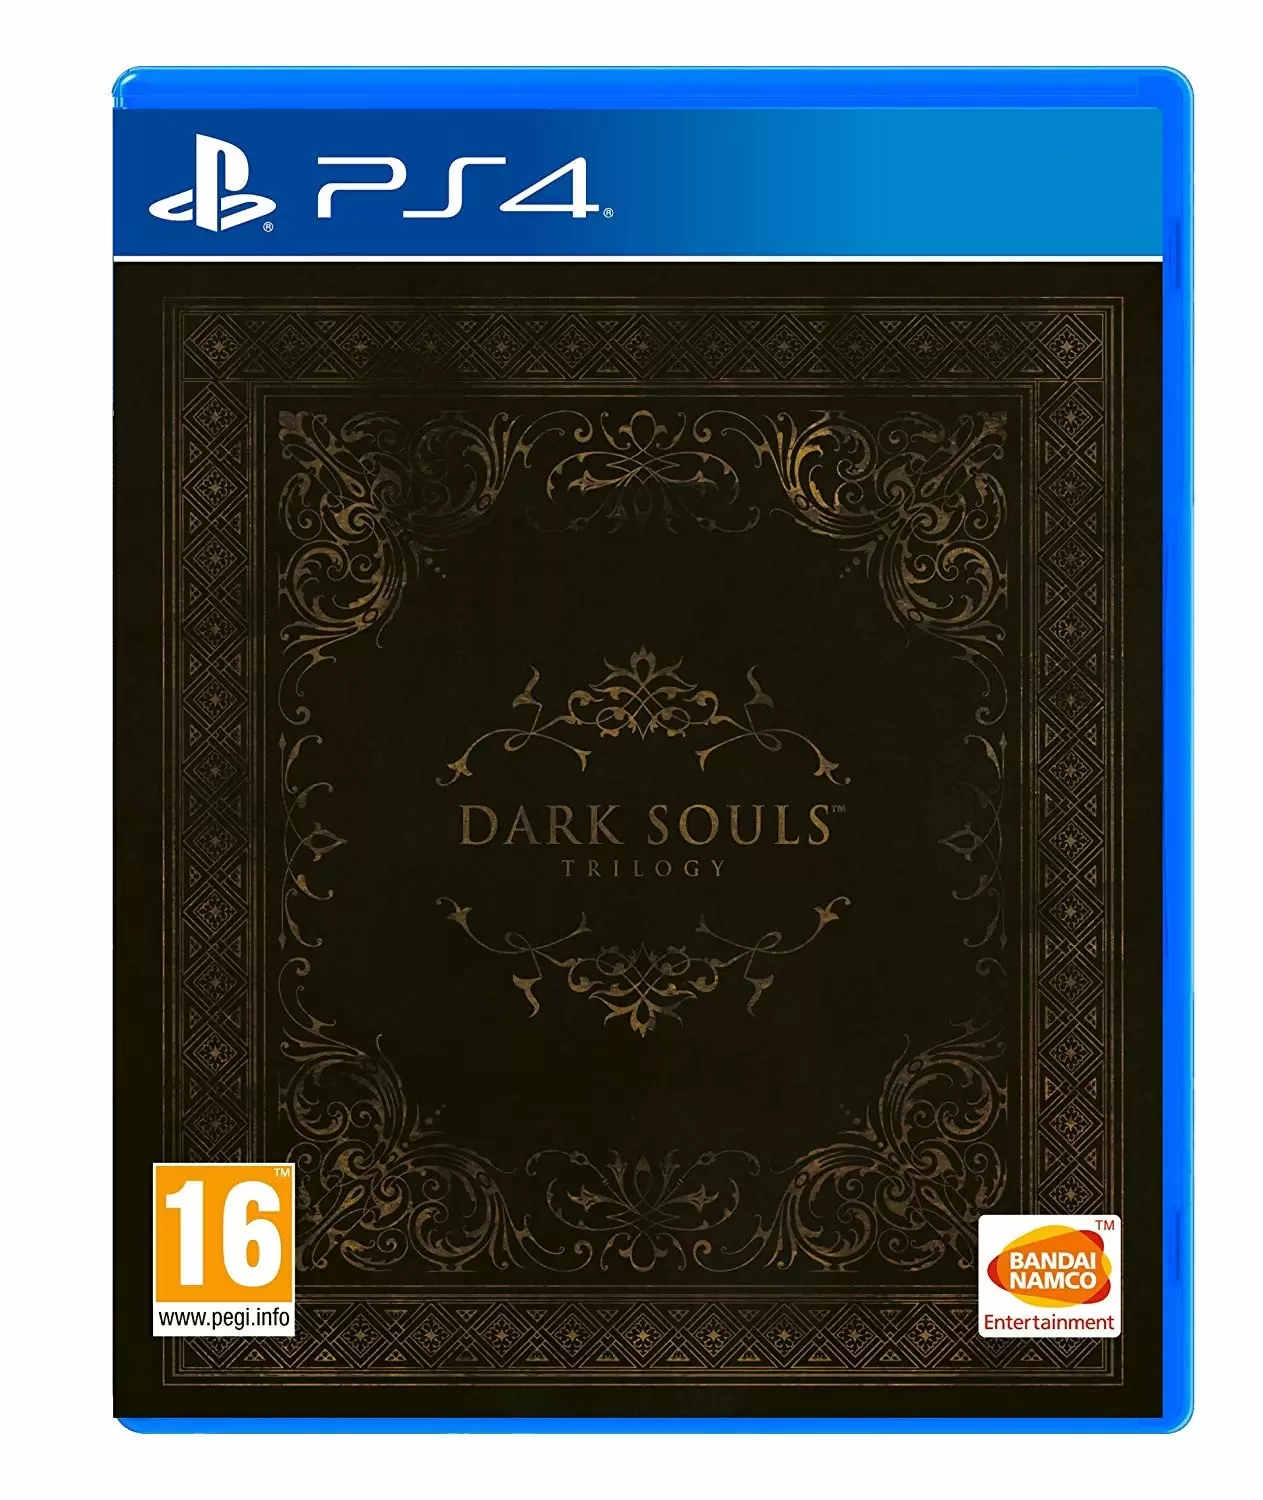 PS4 Games - Dark Souls Trilogy